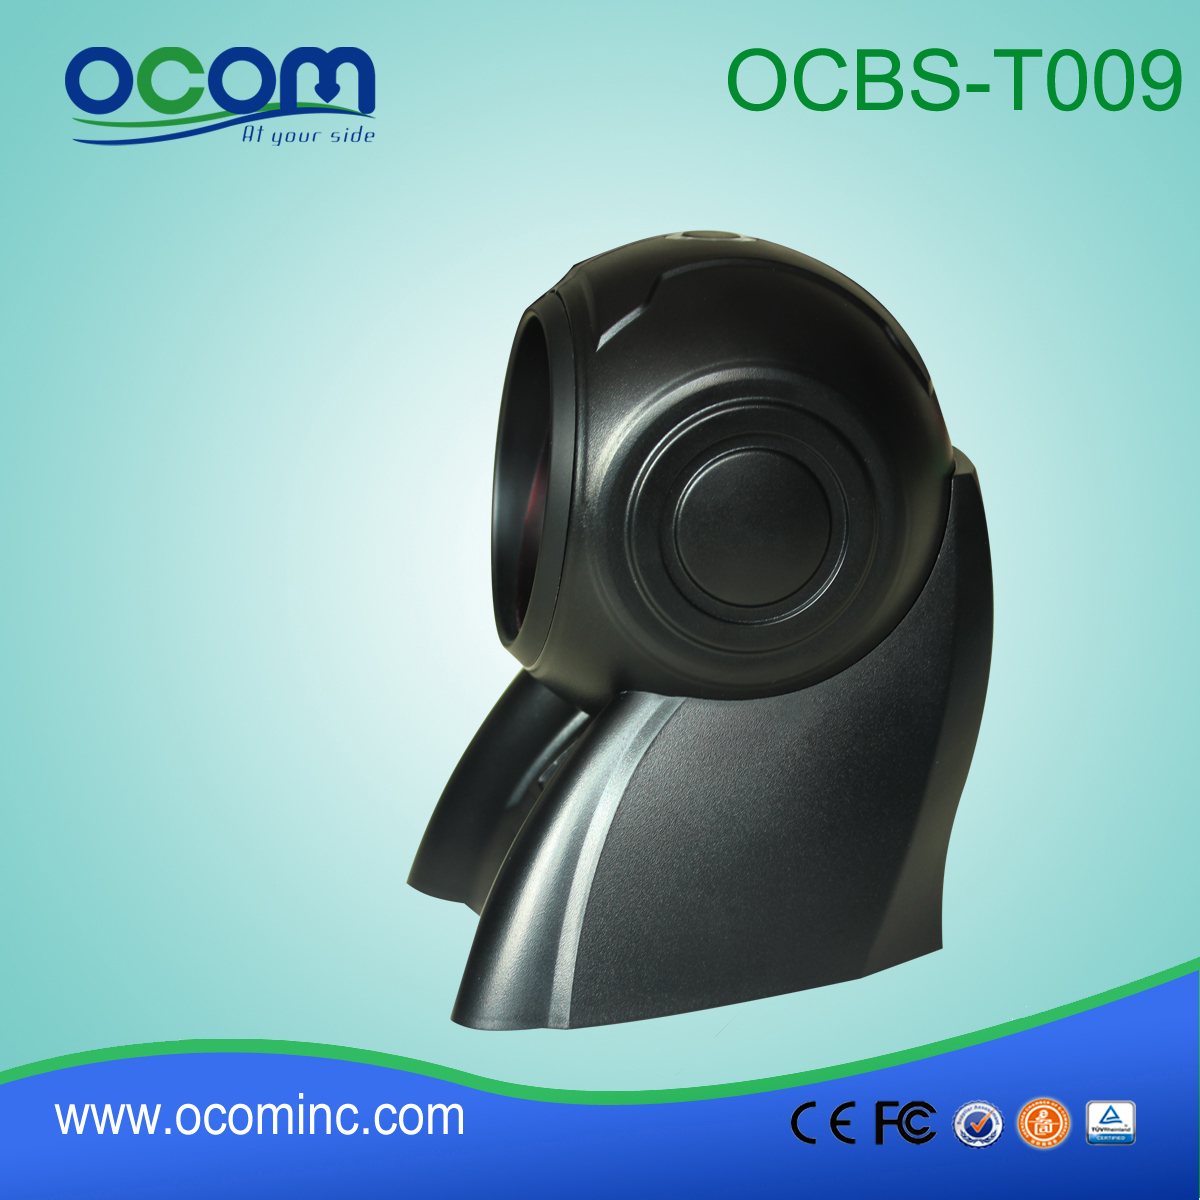 OCBs-T009-Desktop omni-directional barcode scanner αυτοκινήτων